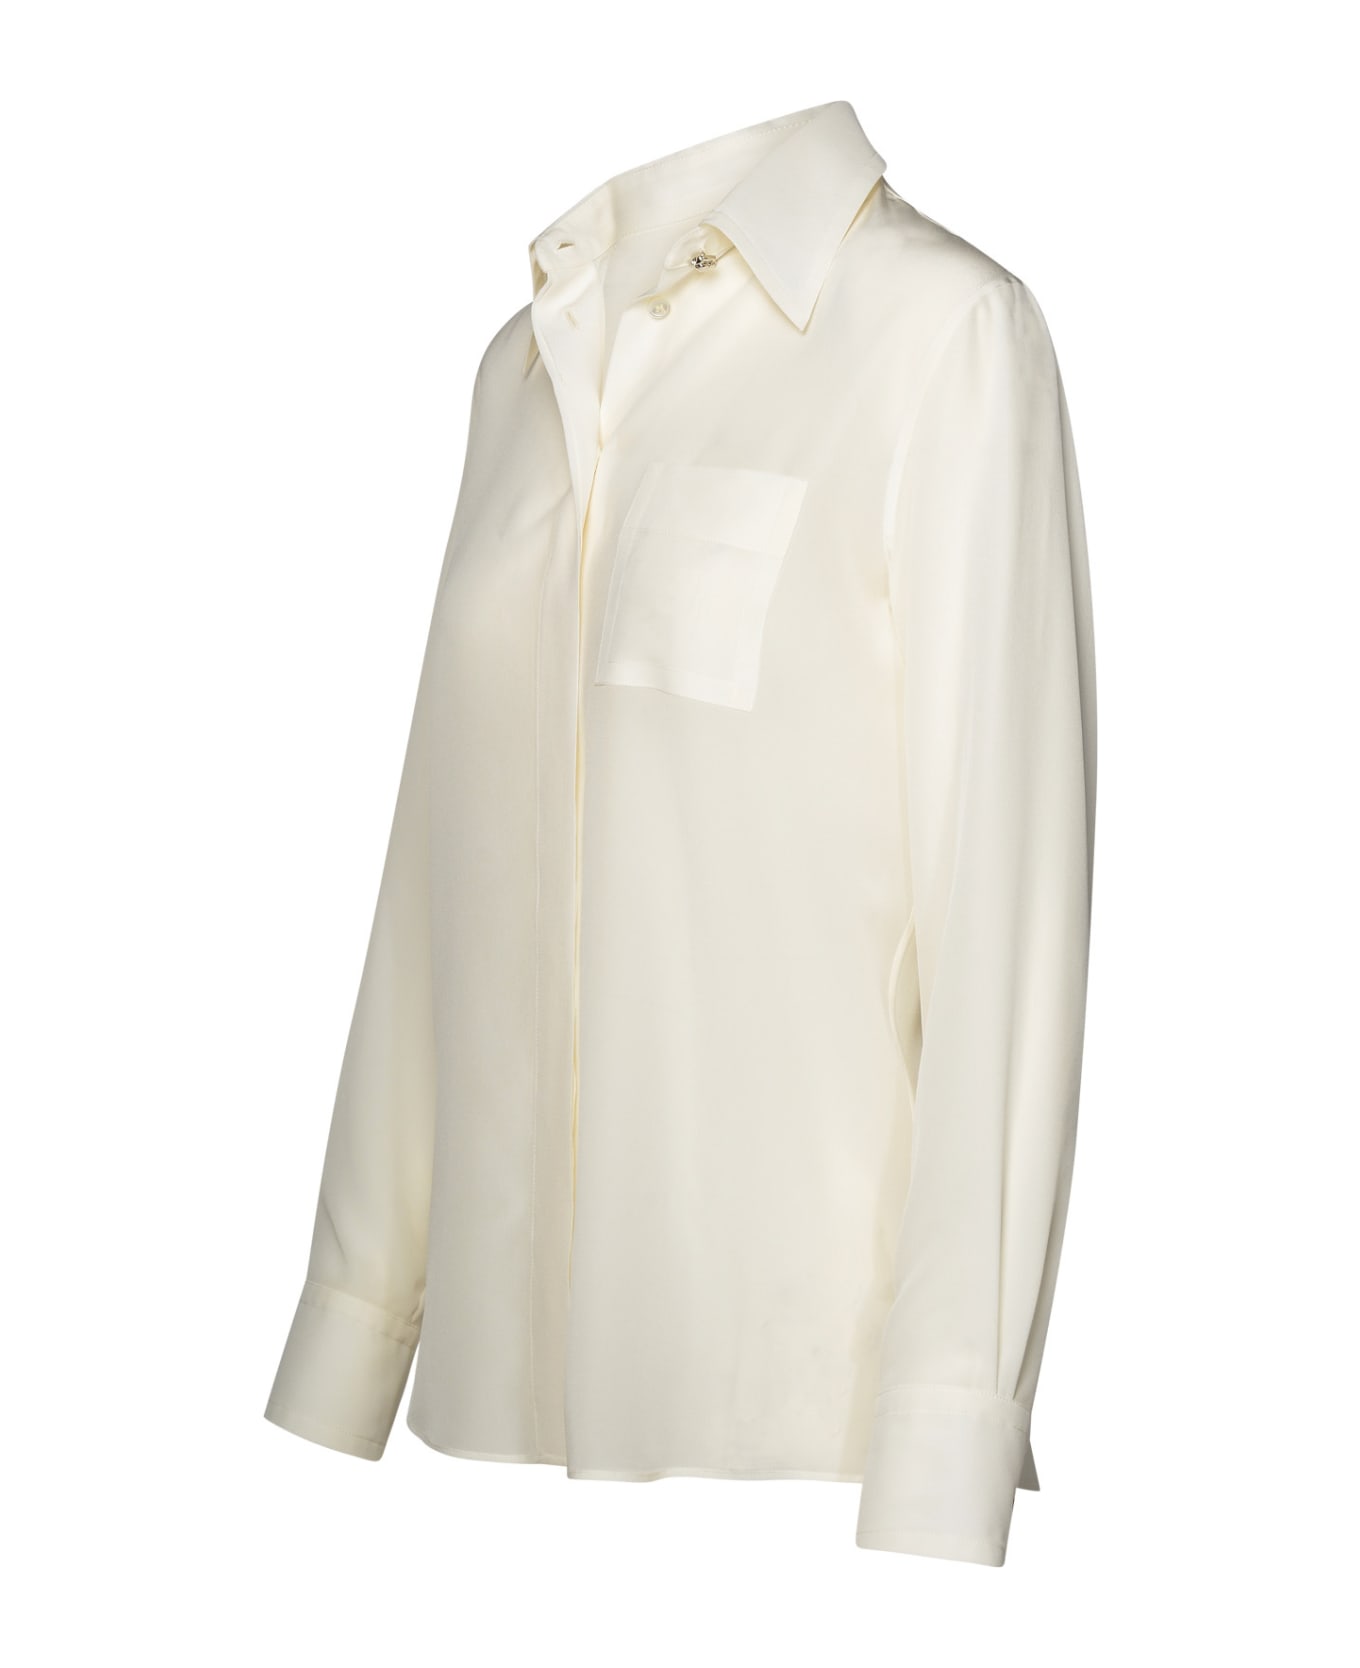 Lanvin White Silk Shirt -  Bianco シャツ